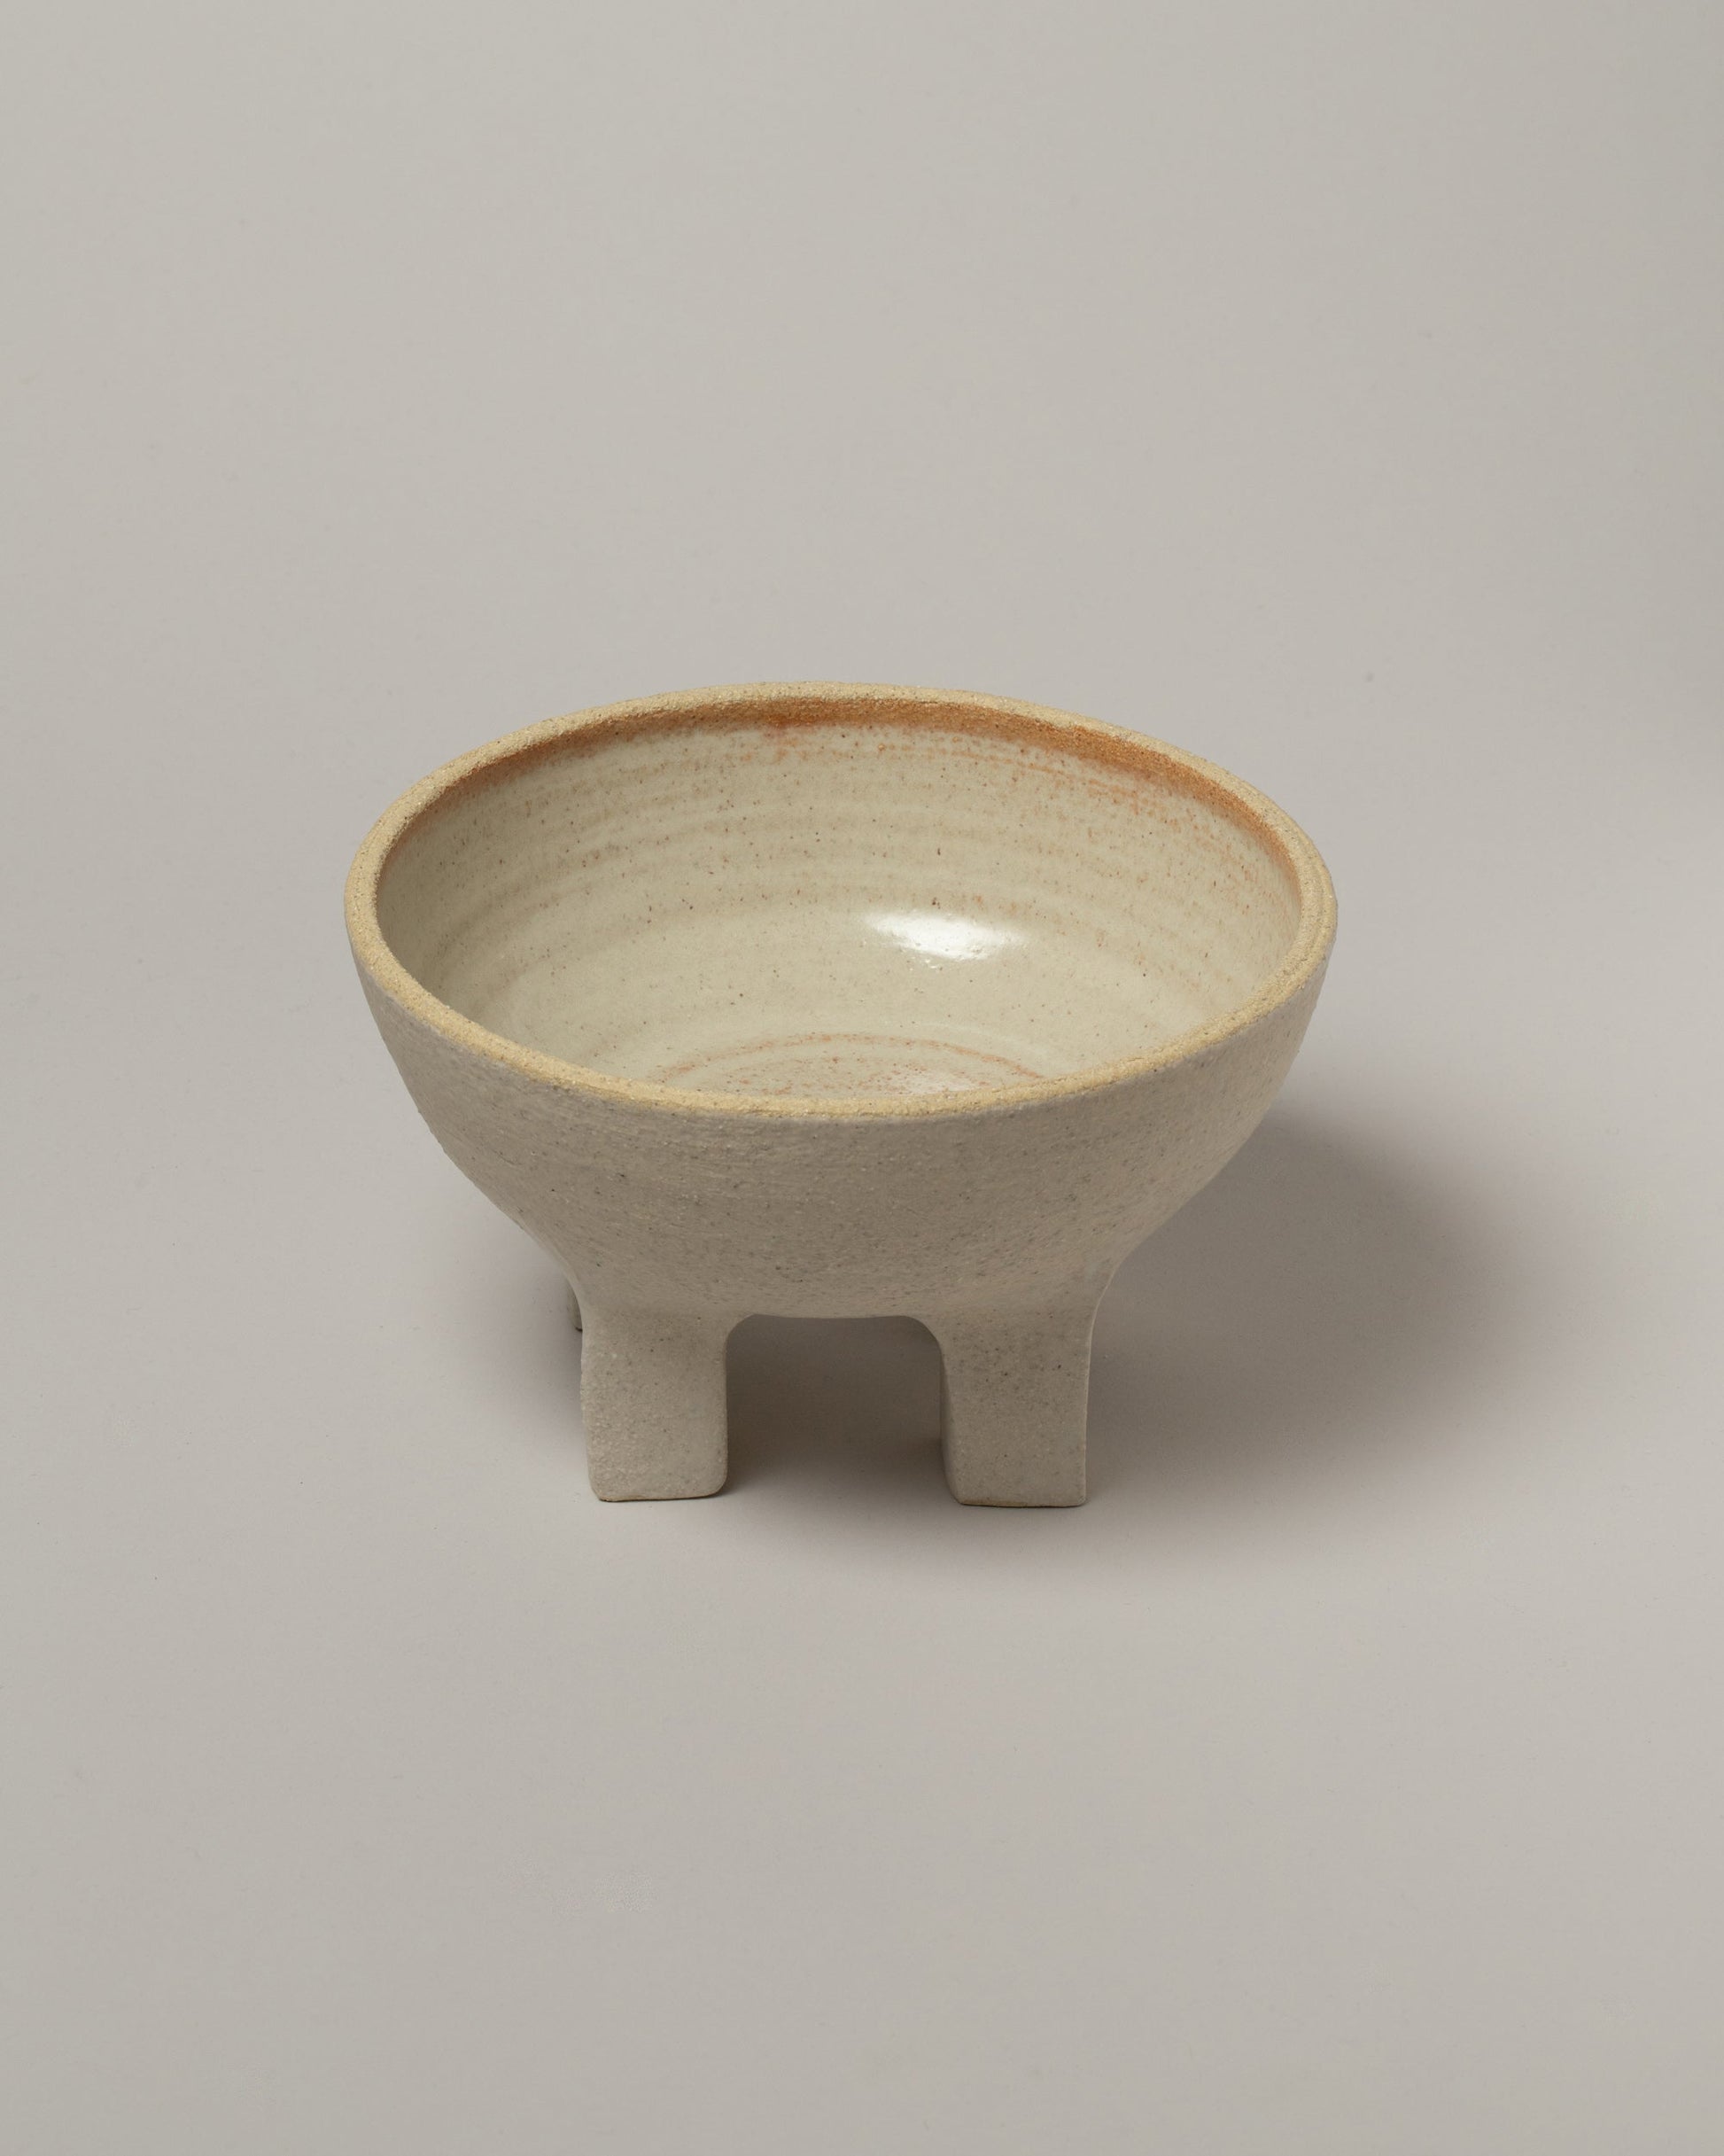 Nur Ceramics Ritual Bowl on light color background.